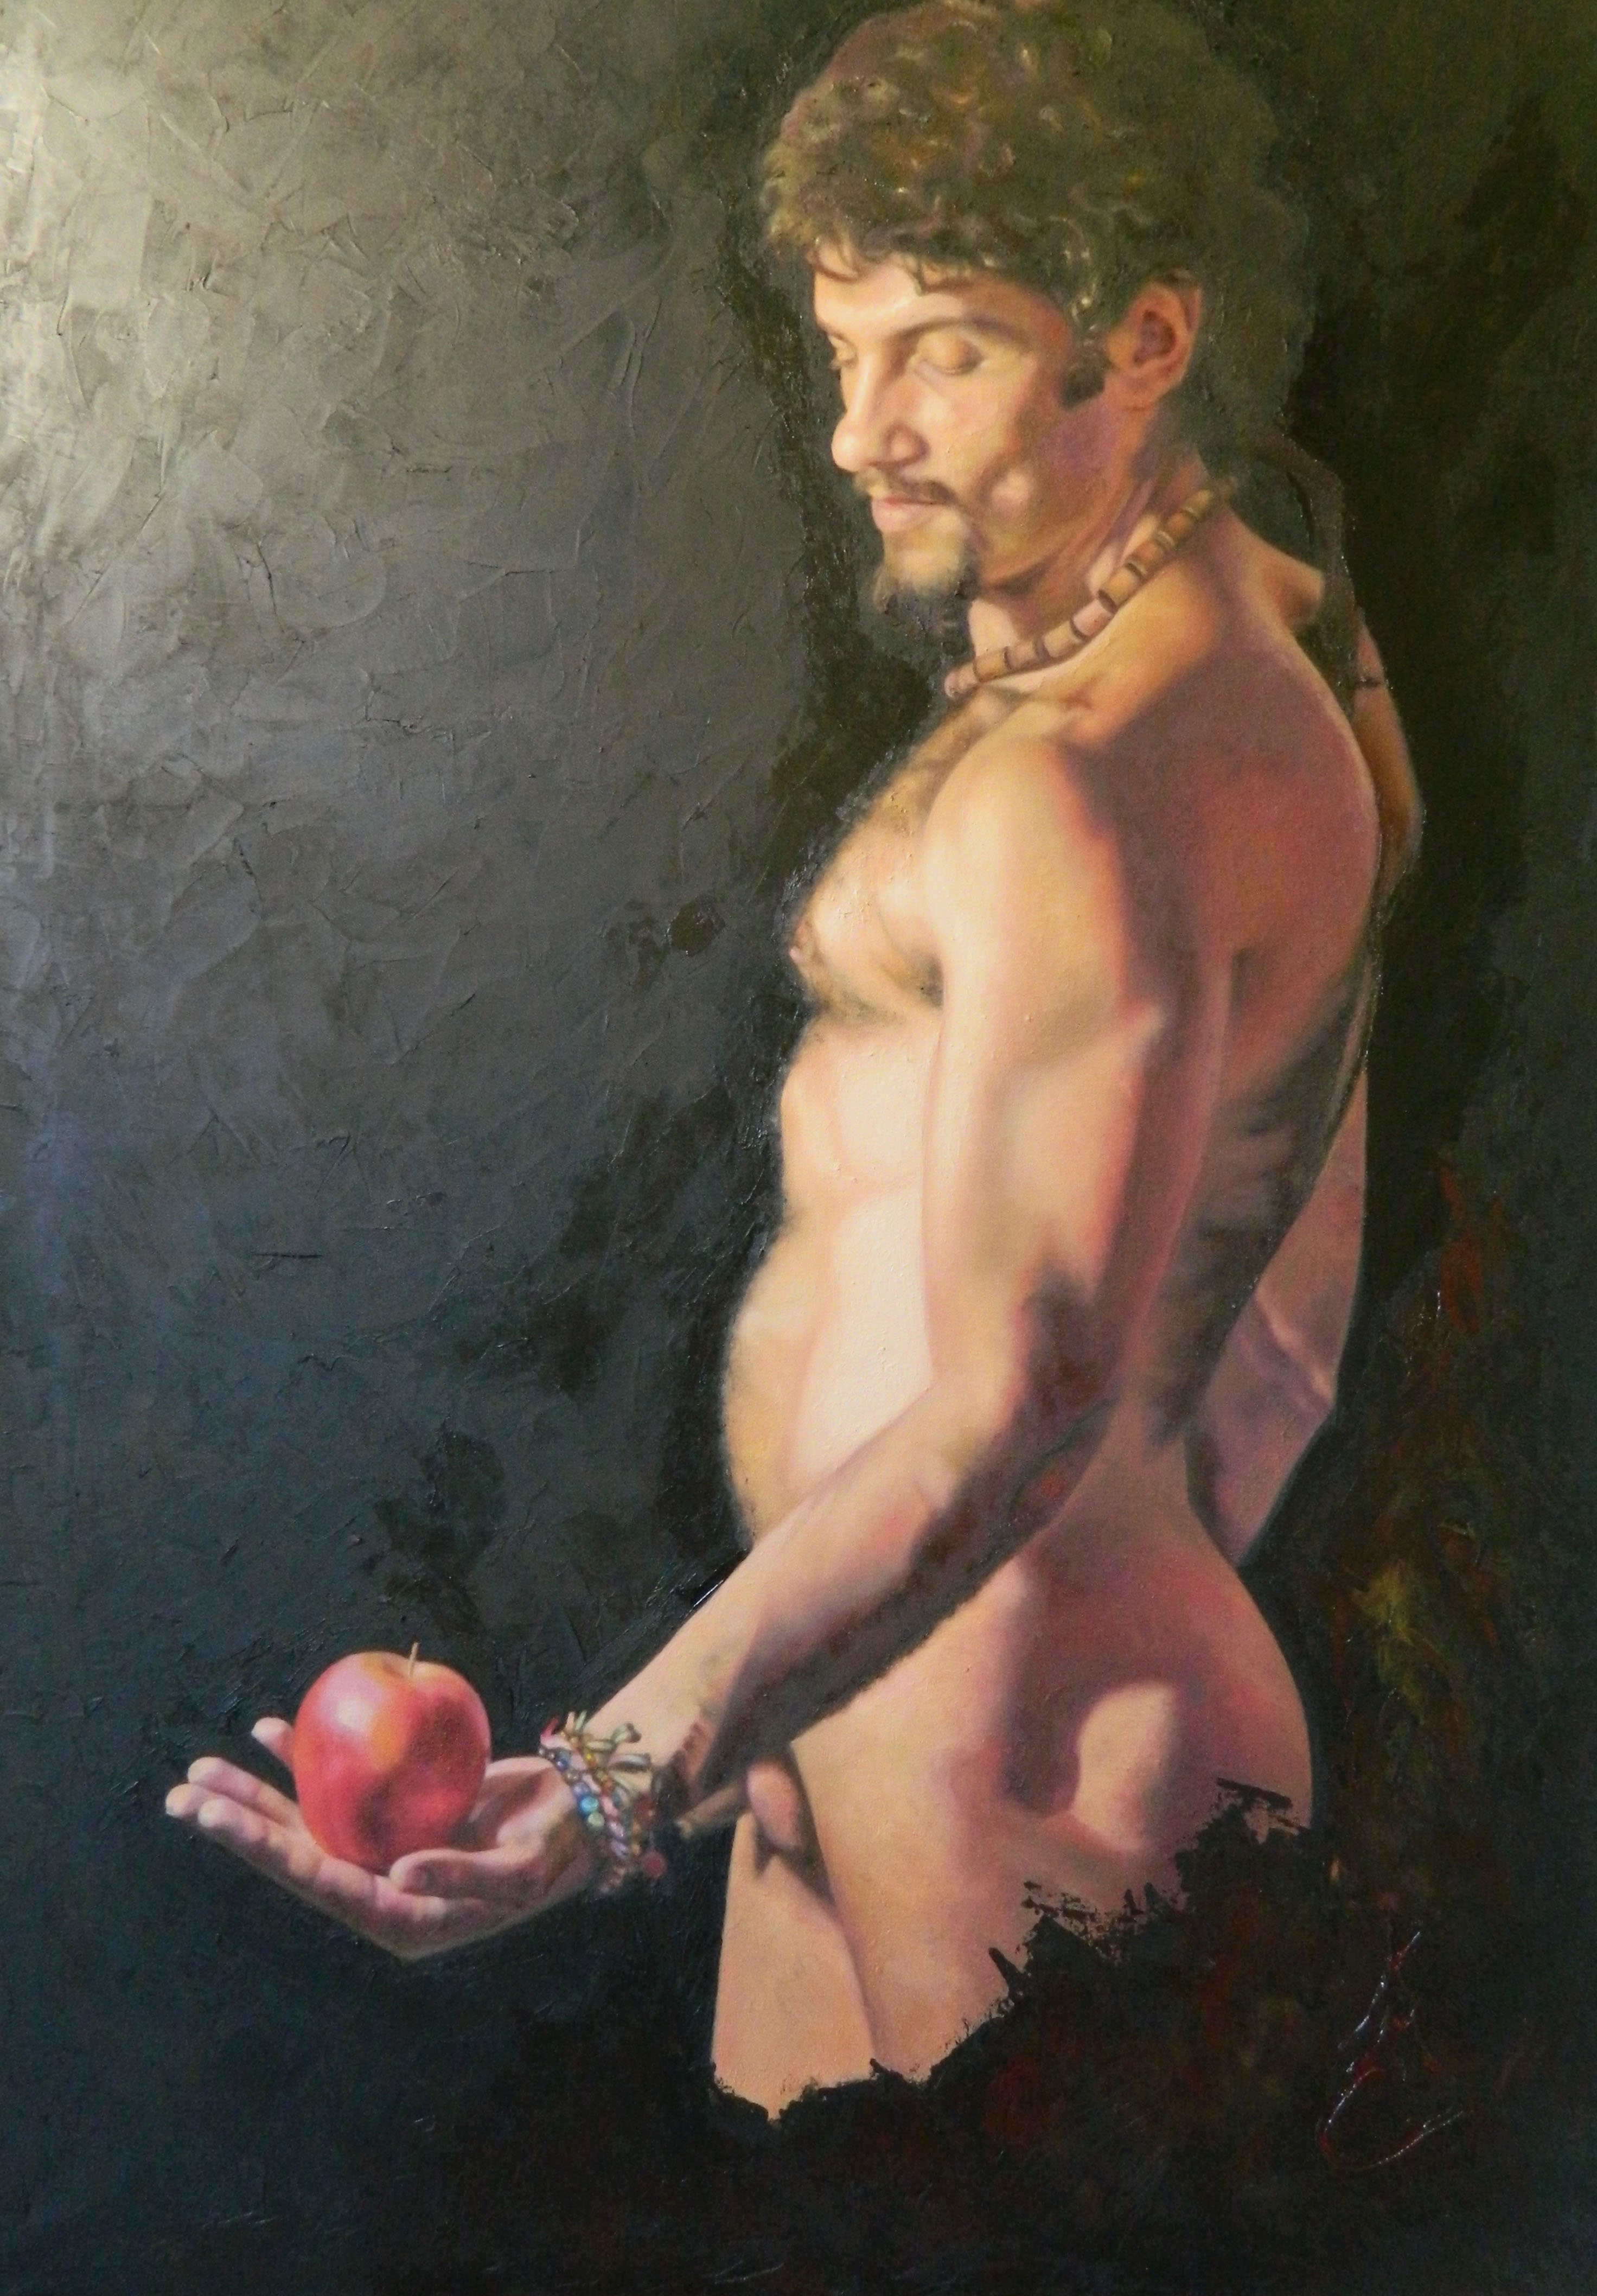 Adamo - Oil painting on canvas - 100x149 cm